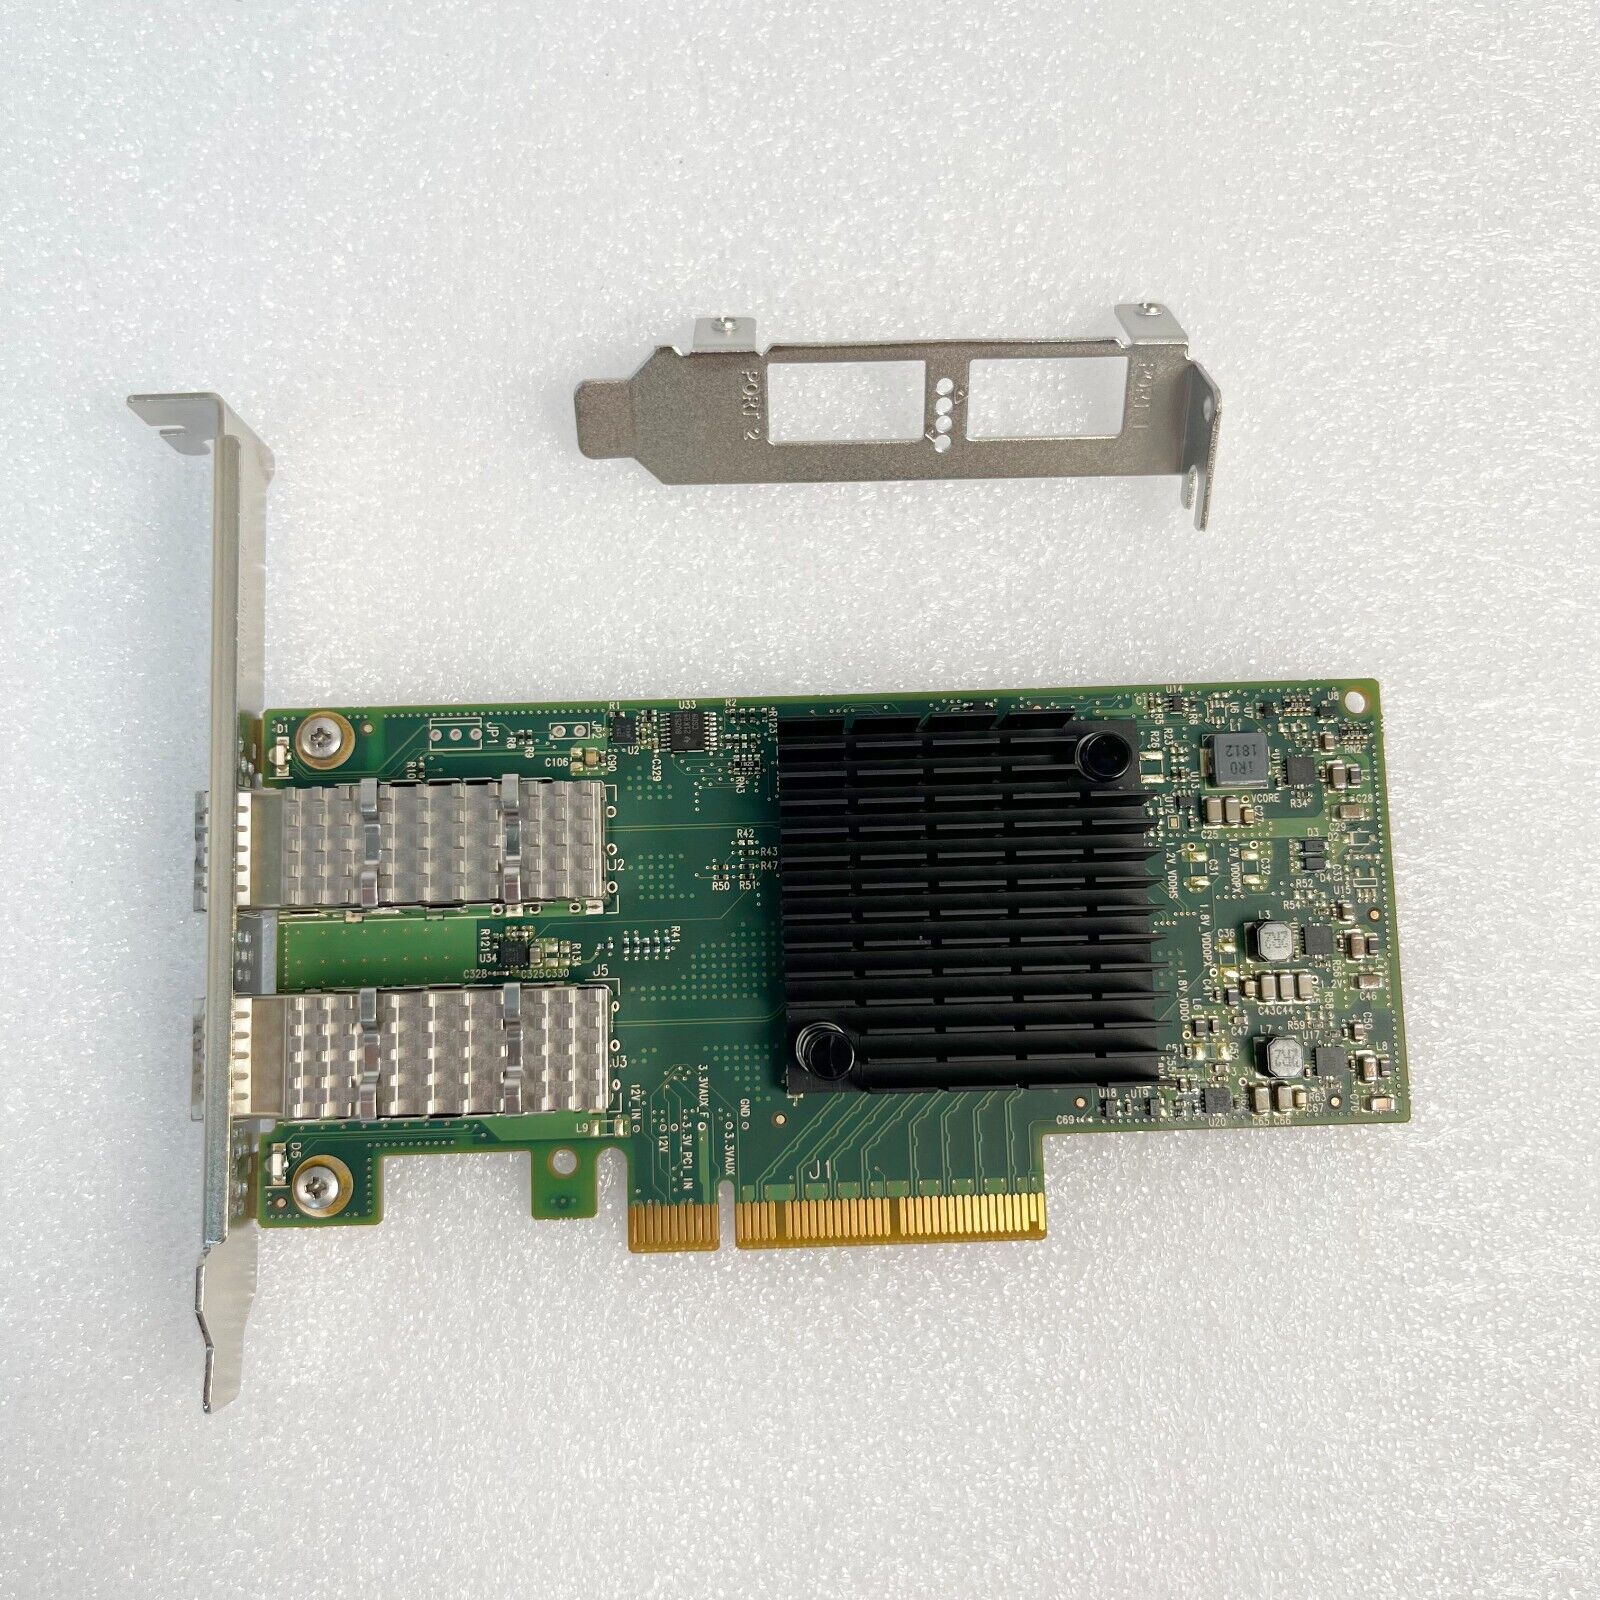 MCX4121A-ACAT Mellanox ConnectX-4 Lx 25GbE SFP28 2-port PCIe Ethernet Adapter